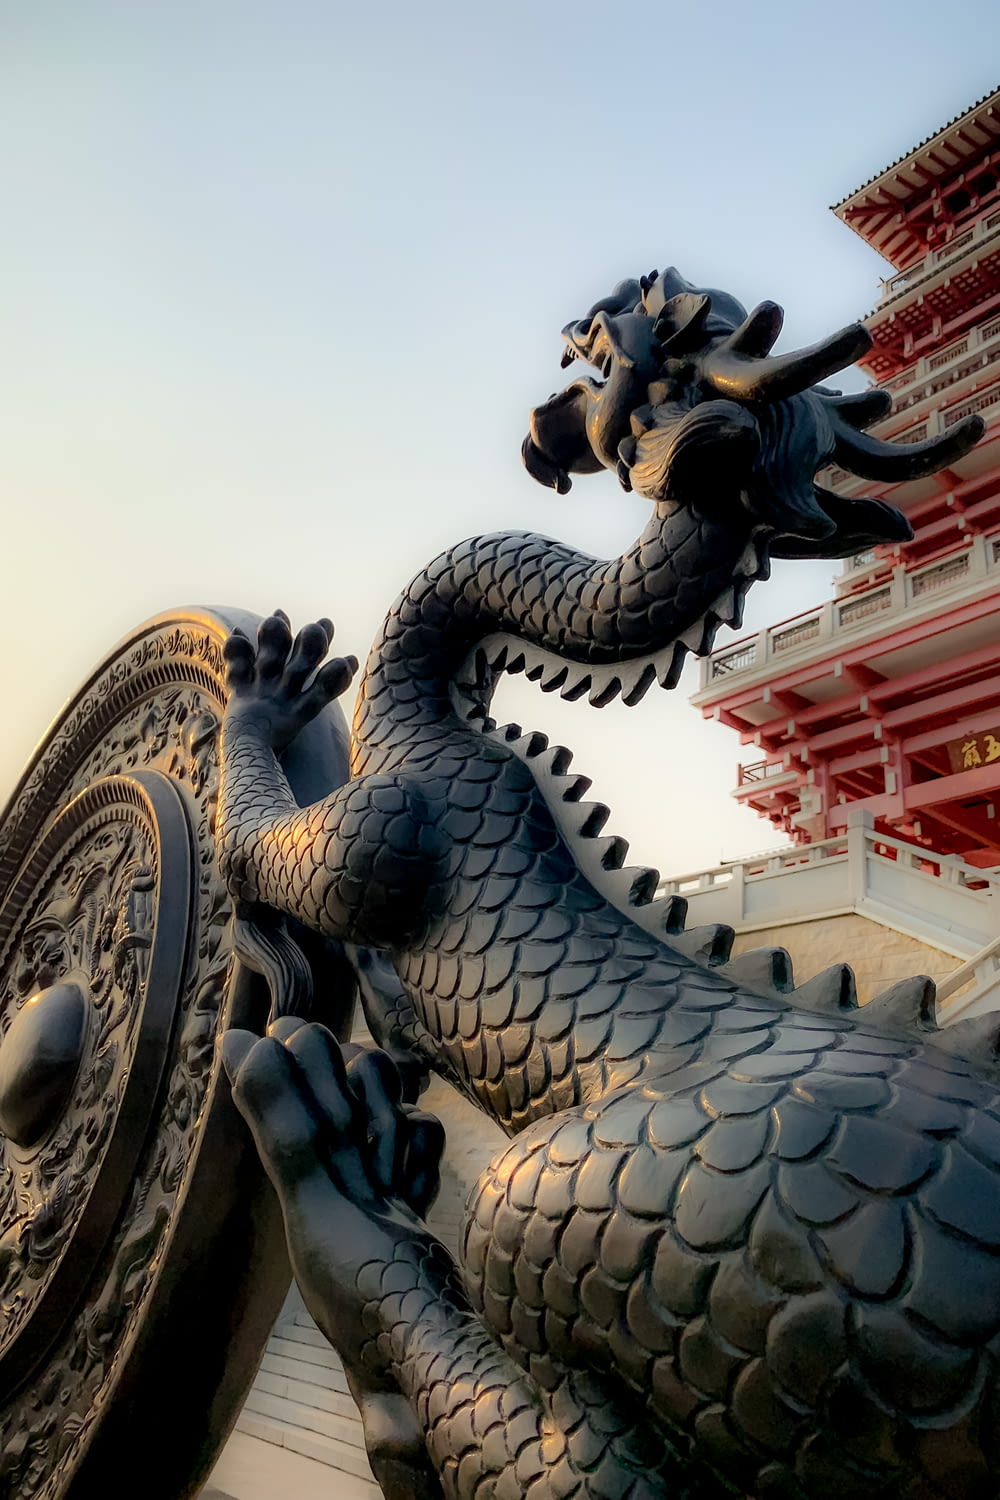 dragon statue under blue sky during daytime